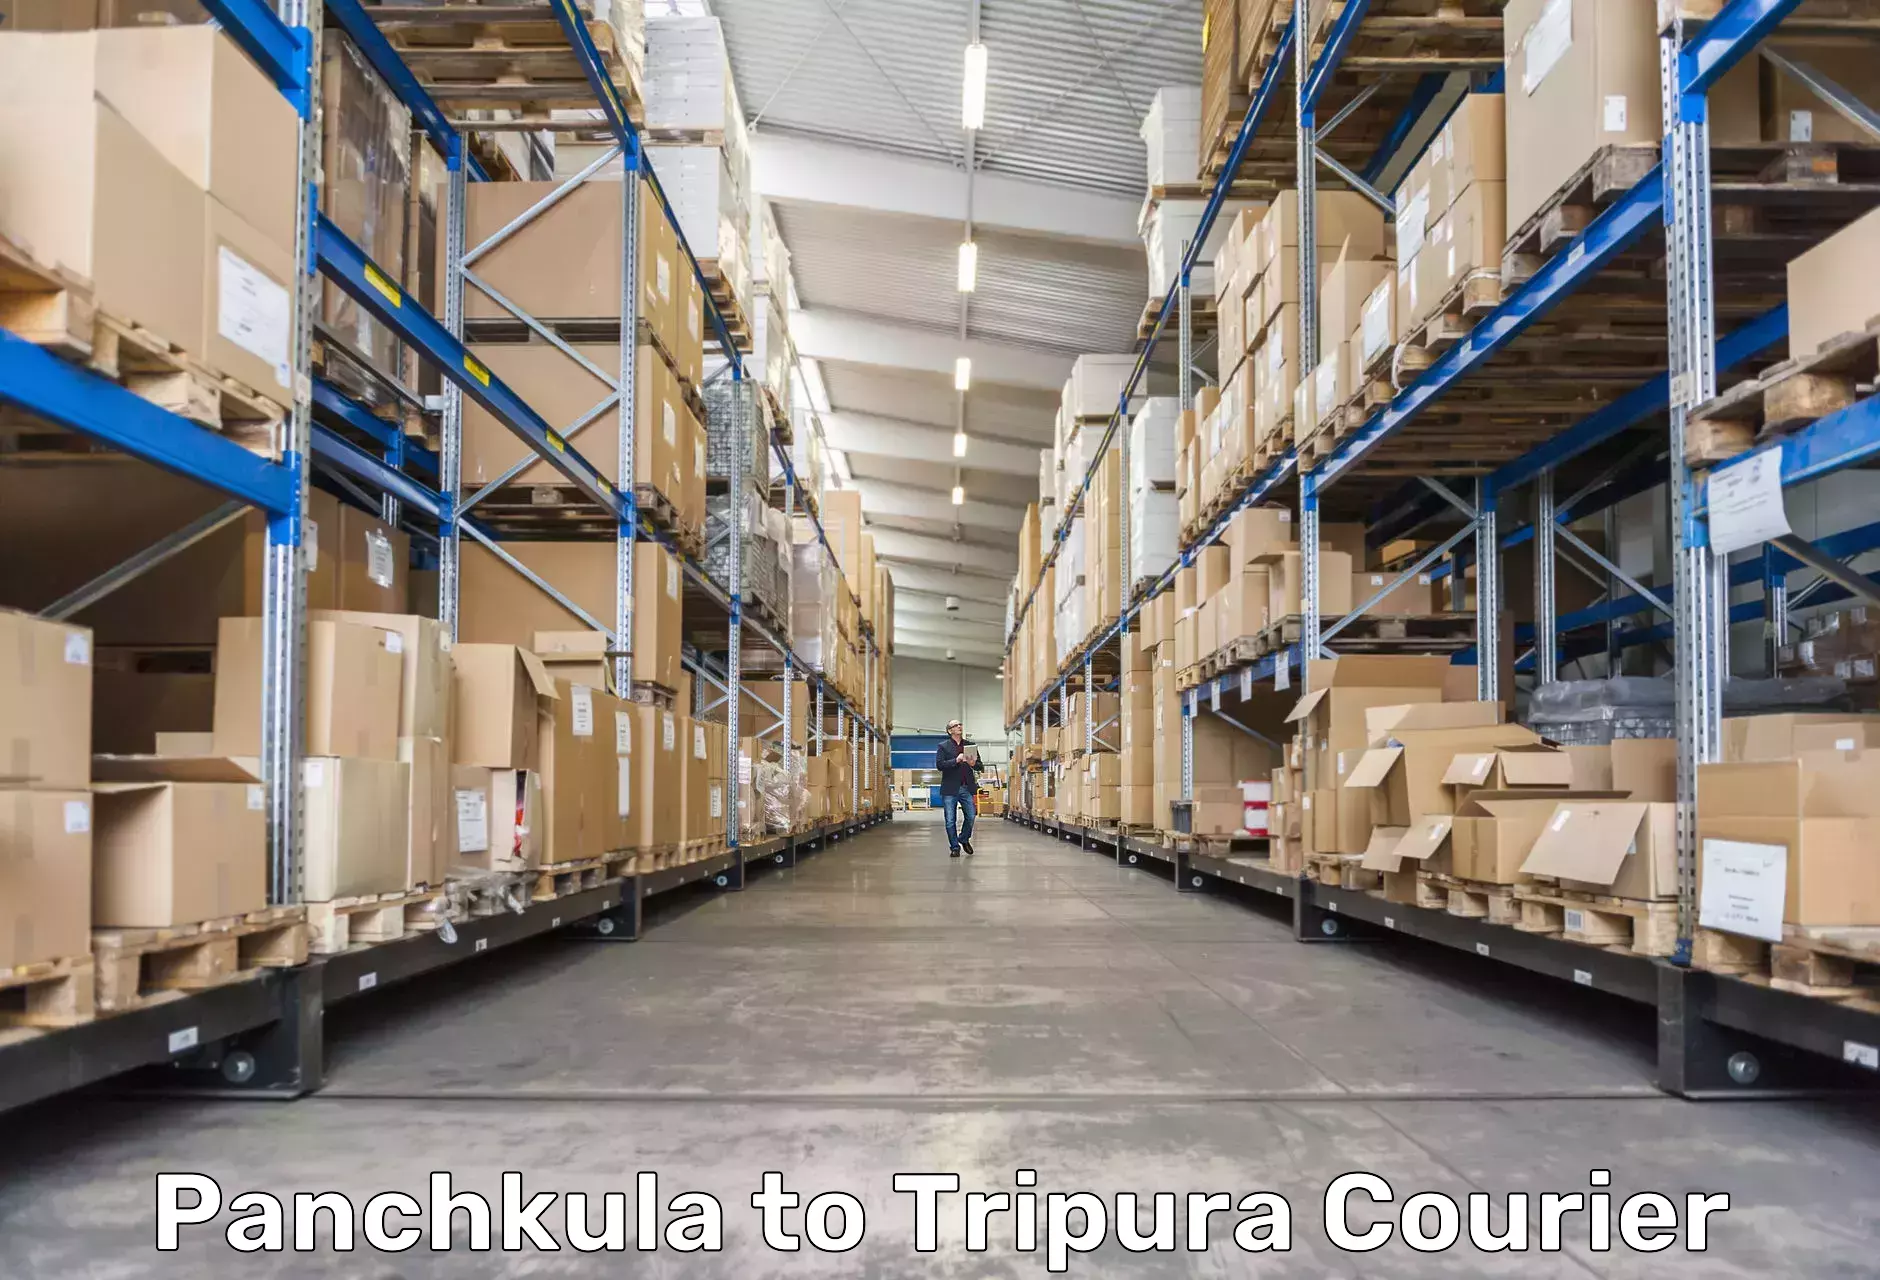 Express courier capabilities Panchkula to Udaipur Tripura